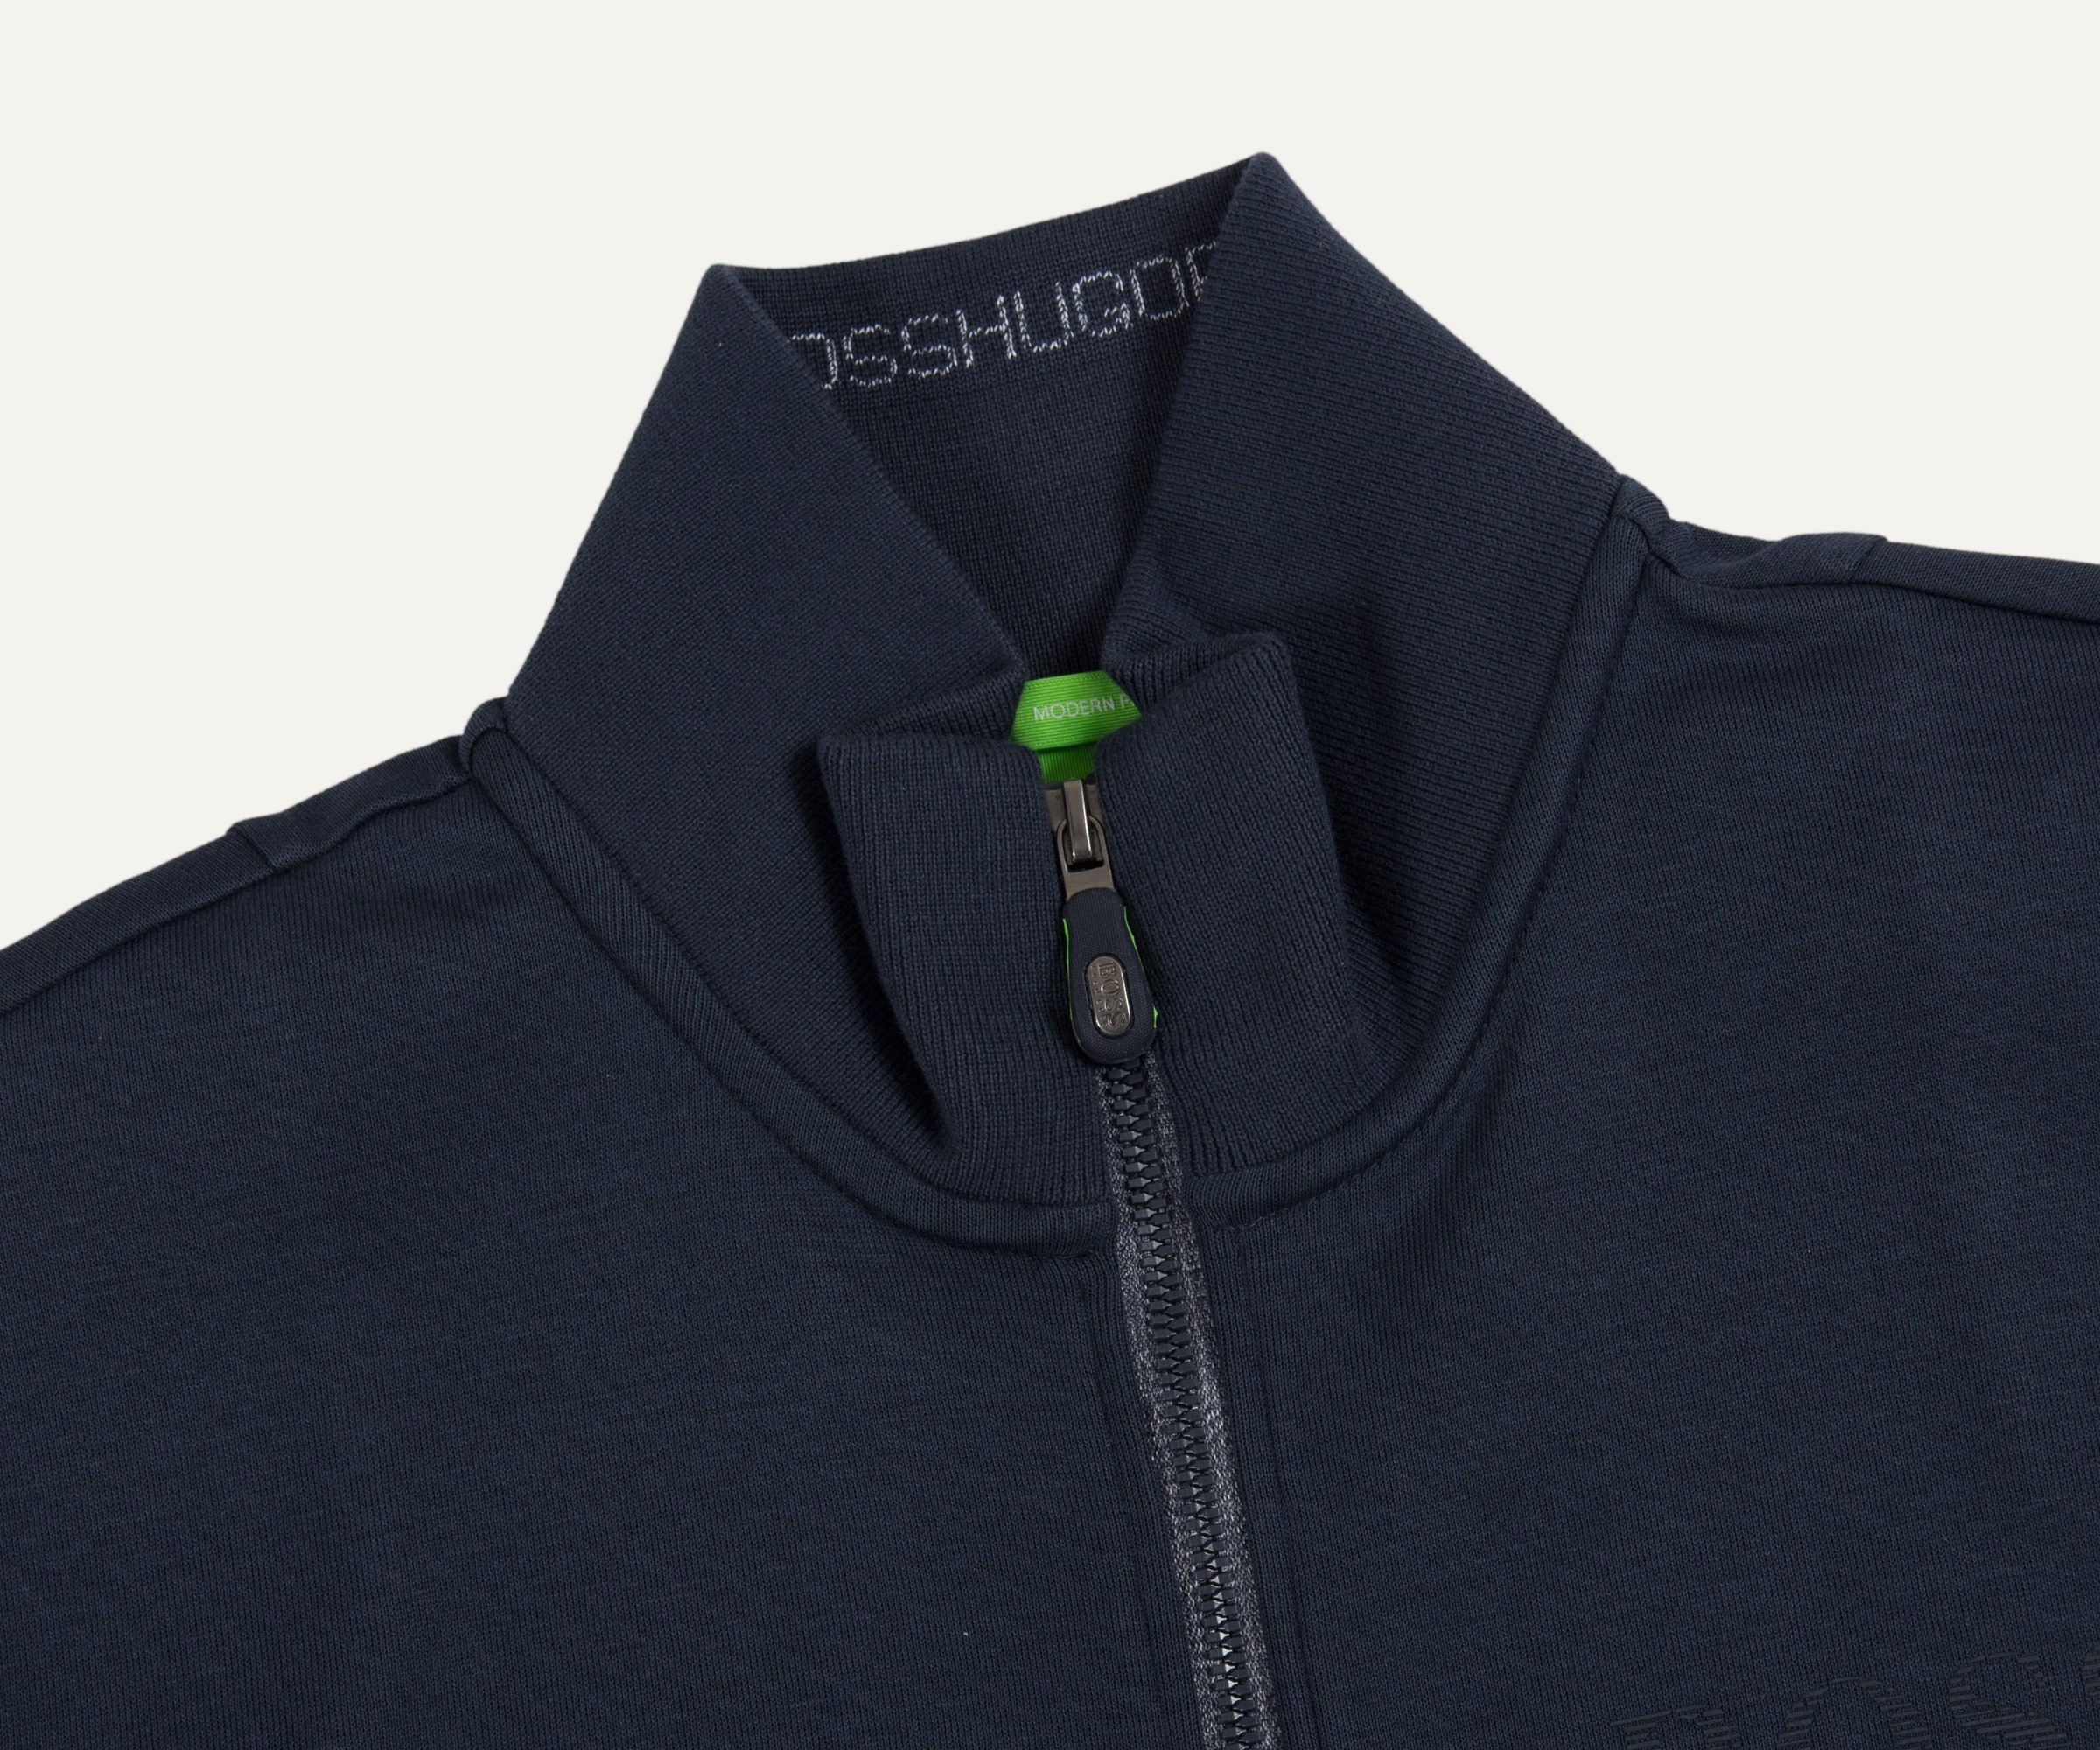 Hugo Boss 'Skaz' Full Zip Collared Sweatshirt